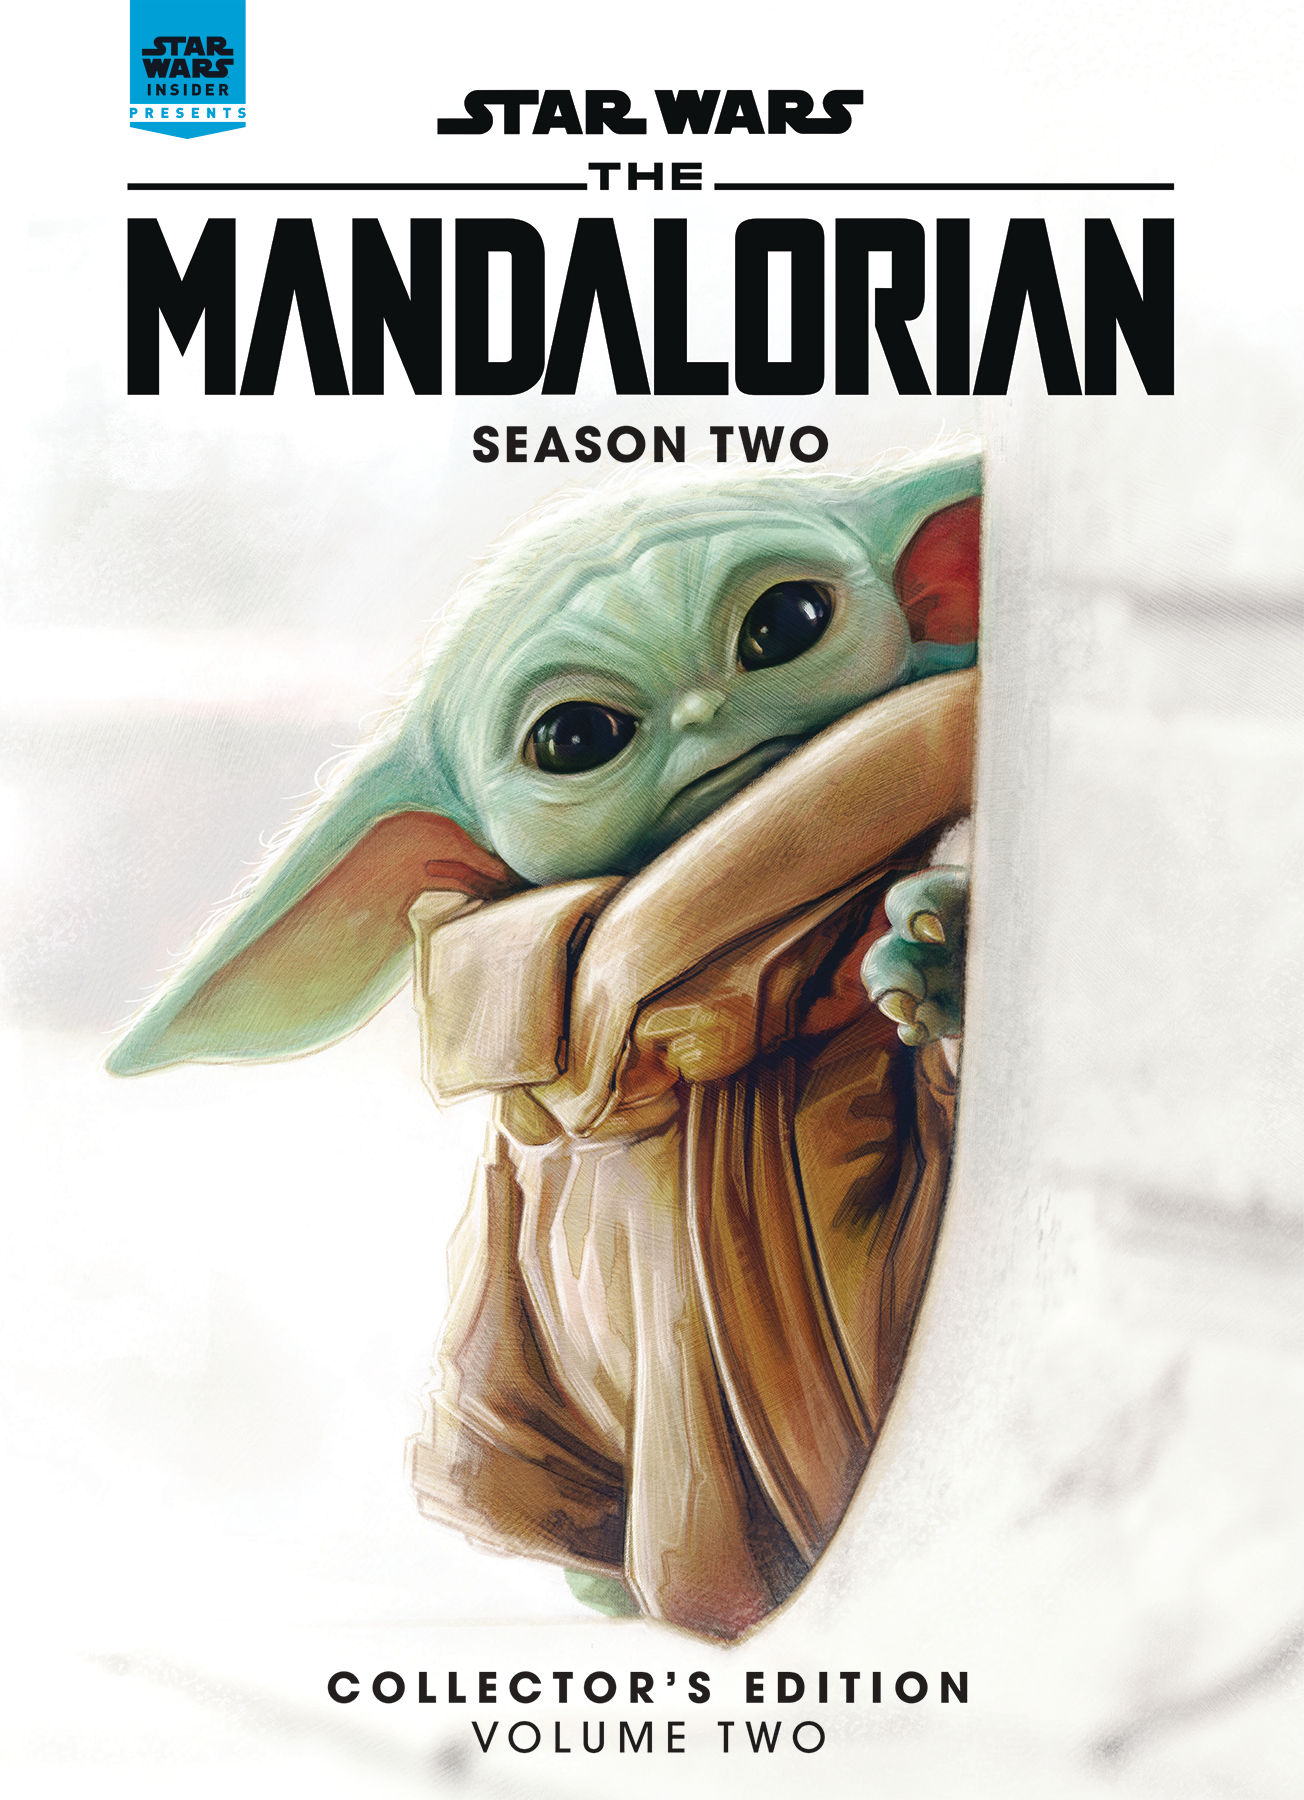 Star Wars The Mandalorian Guide To Season Two Hardcover Volume 2